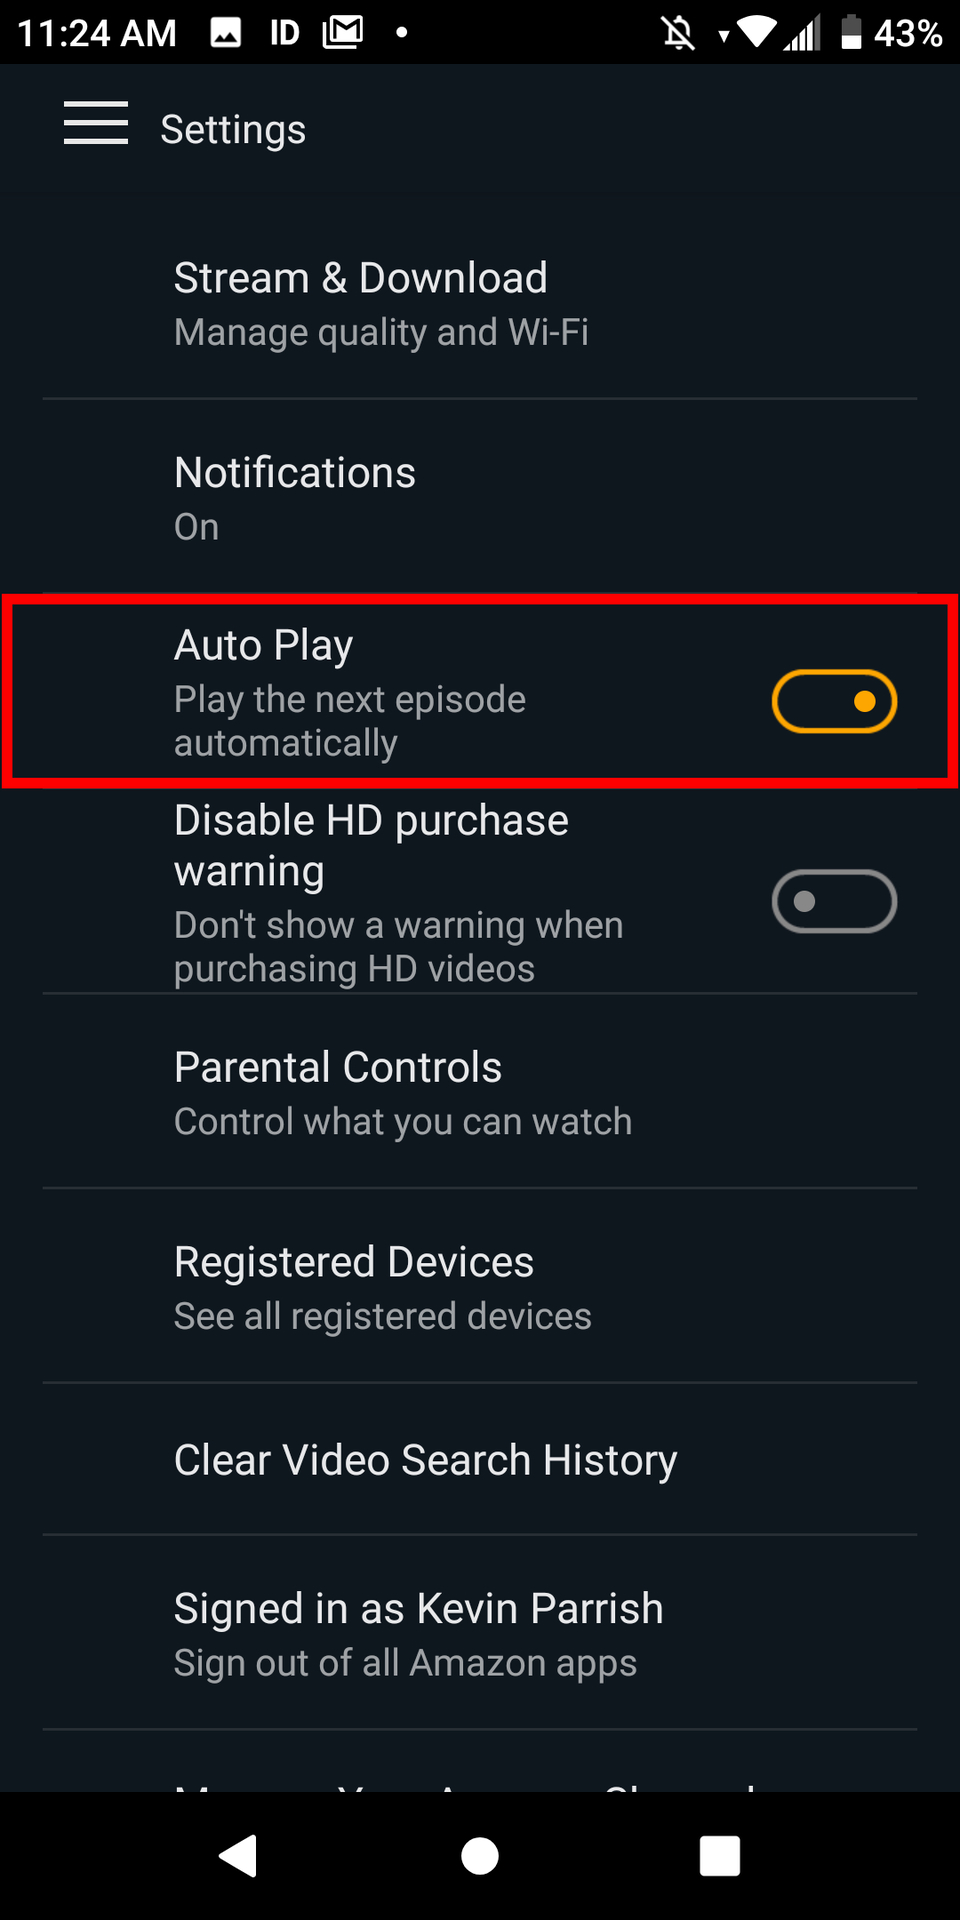 Amazon Prime Android Settings Auto Play